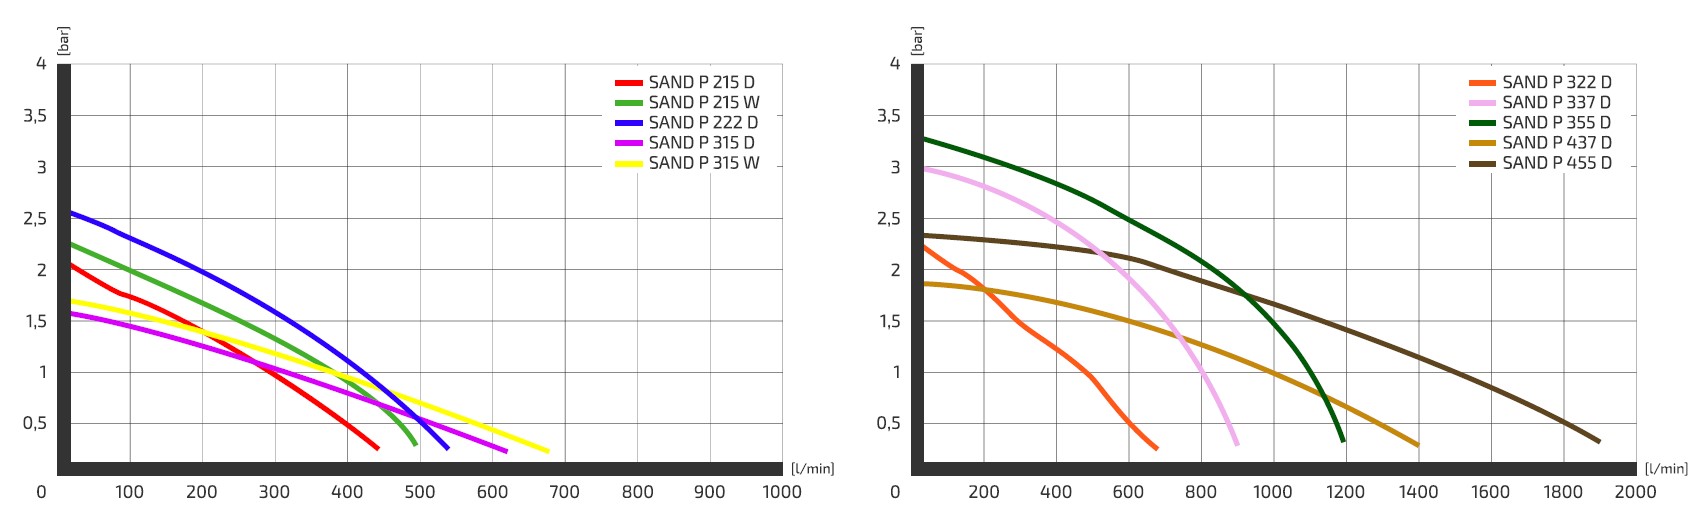 SAND SPT P 355 D Schmutzwasserpumpe, 400V, 1200 l/min - Zuwa 1680050